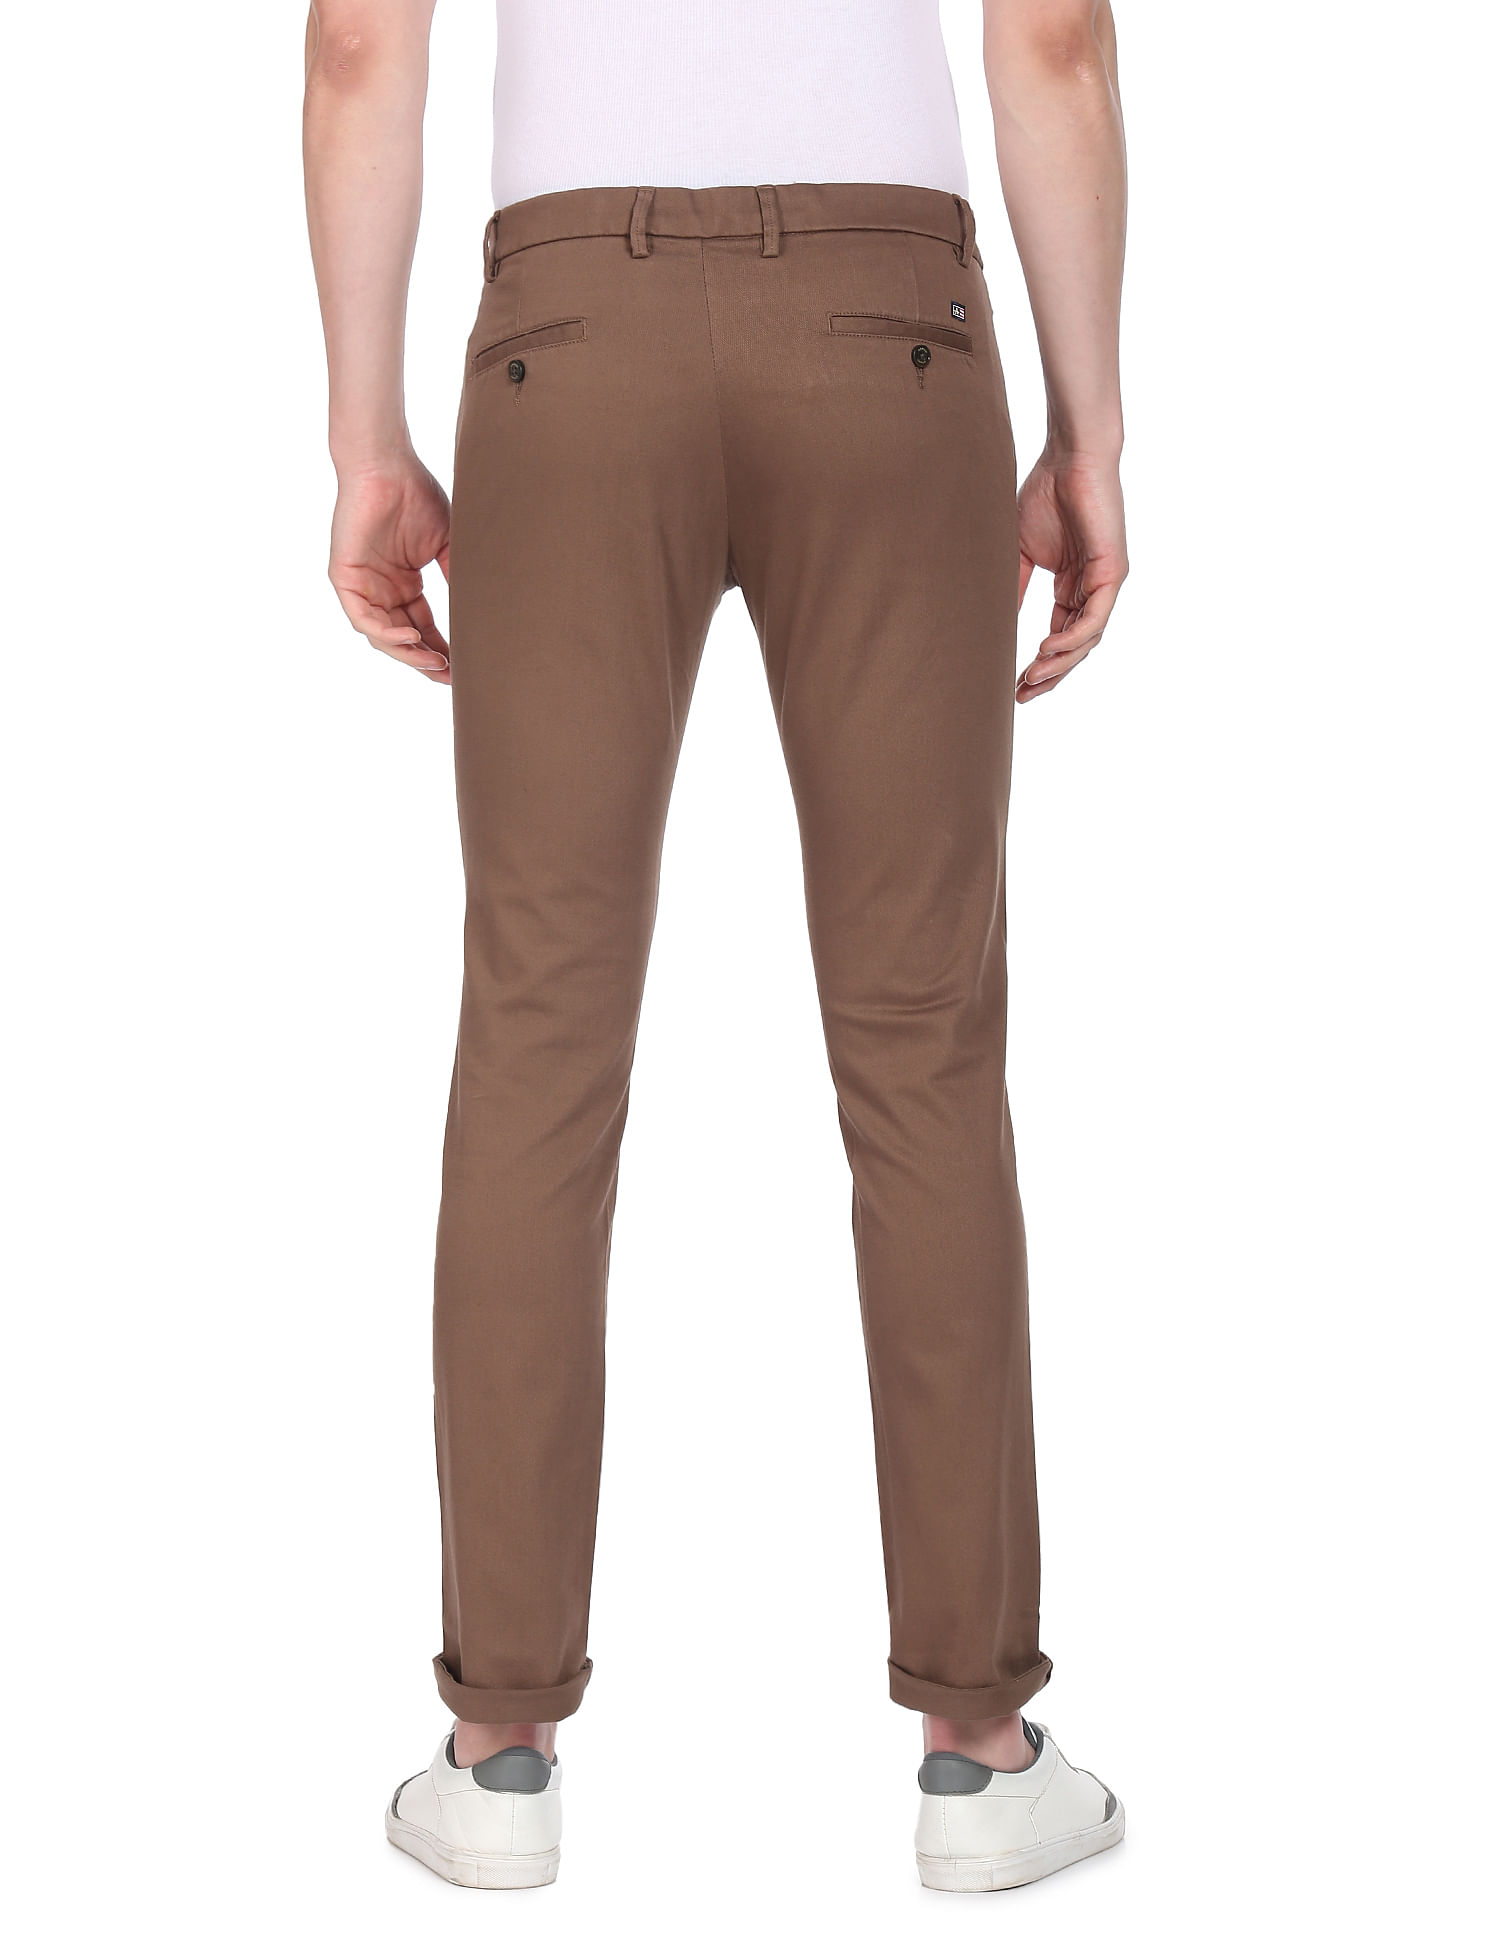 Puloru Men' s Leggings, Boys Solid Color Low Waist Trousers Skinny Pants  for Spring Fall, M/L/XL/XXL - Walmart.com